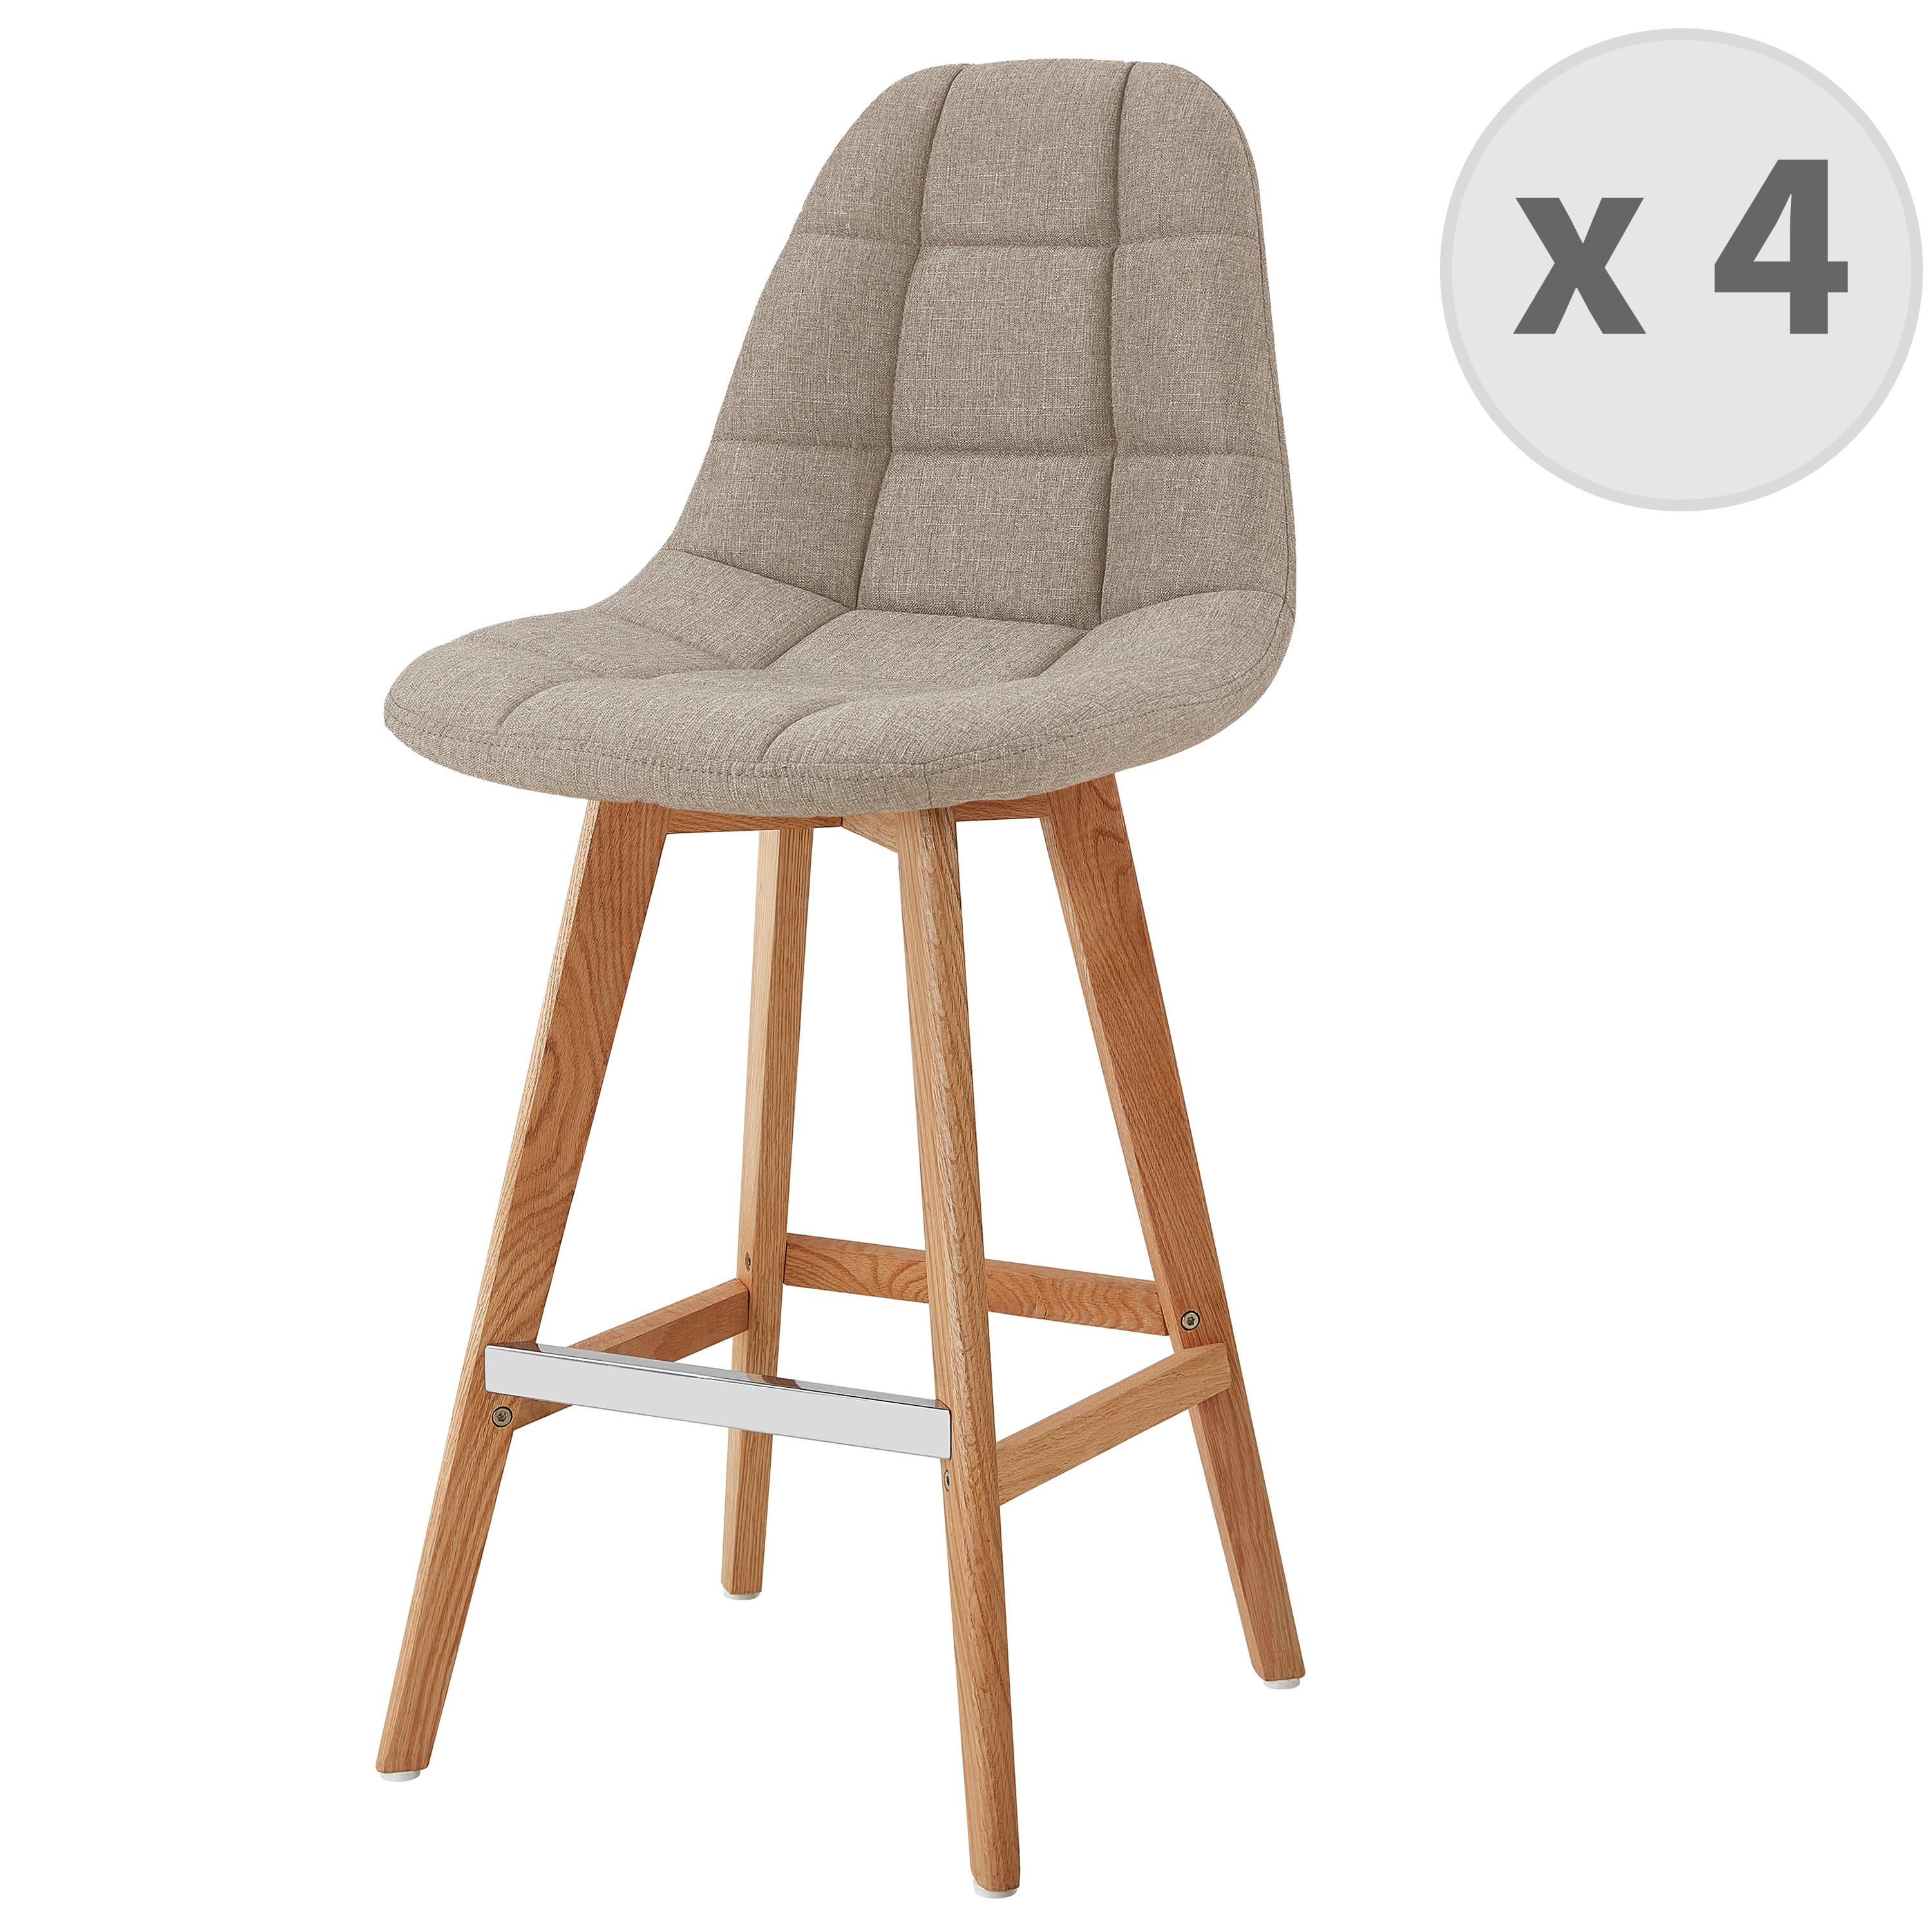 OWEN - Chaise de bar scandinave tissu Lin pied hêtre (x4)